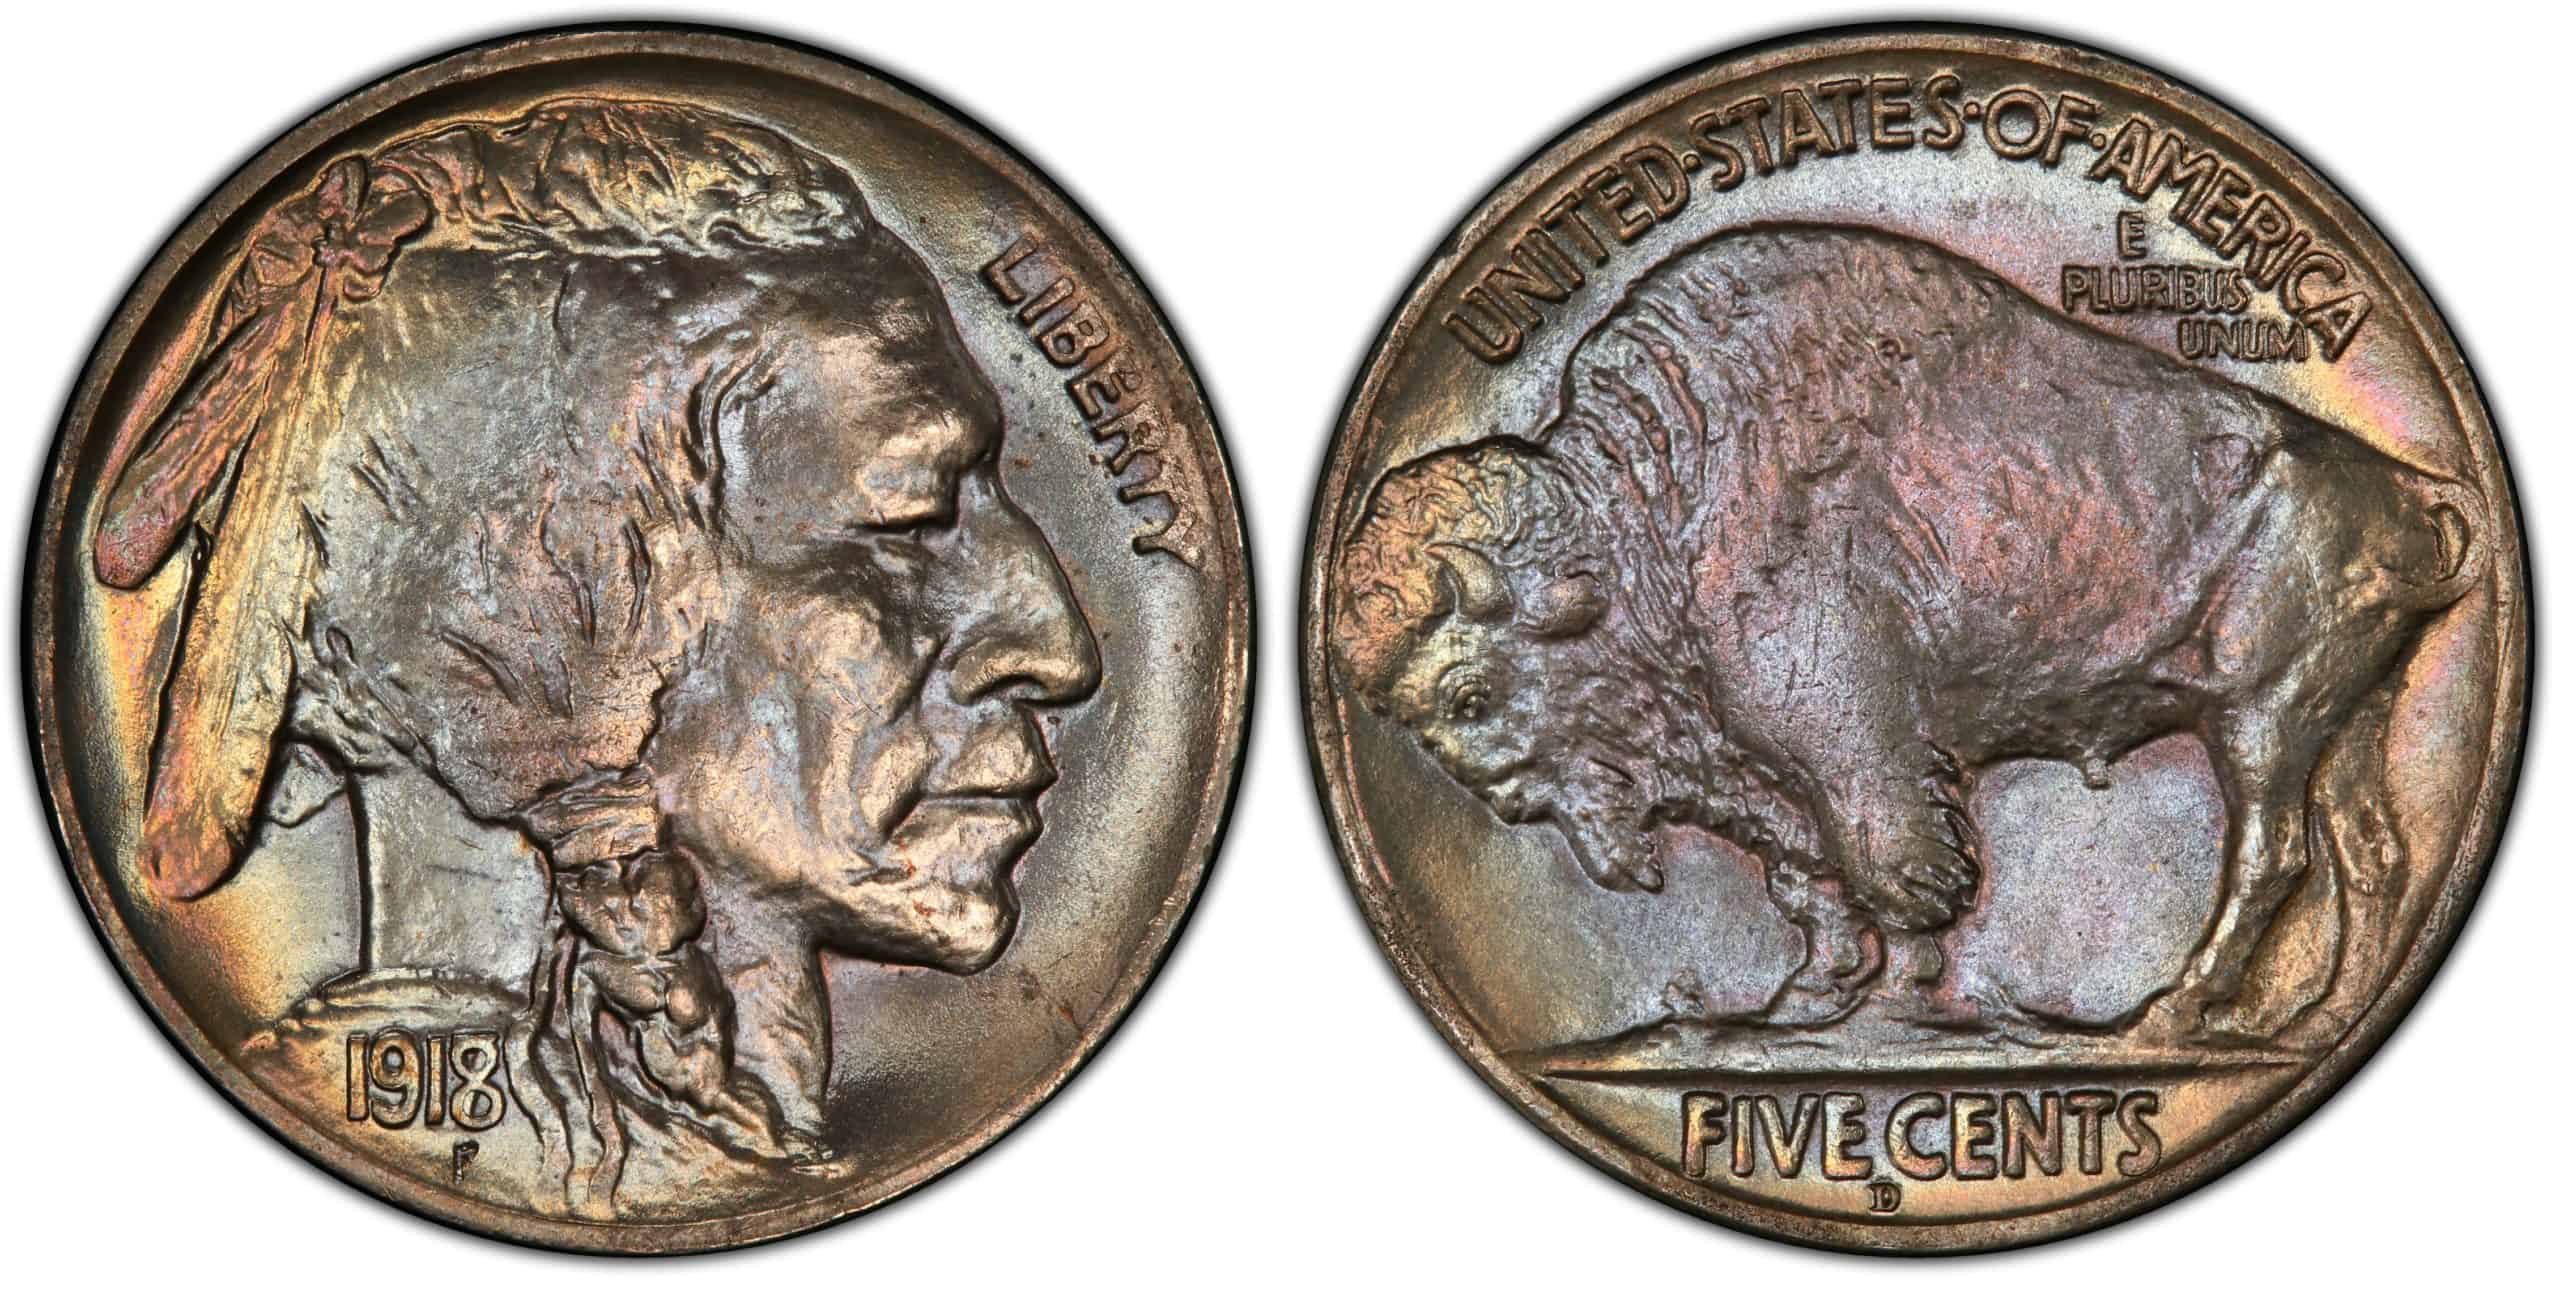 19187 D MS 65 Buffalo nickel (doubled die obverse)